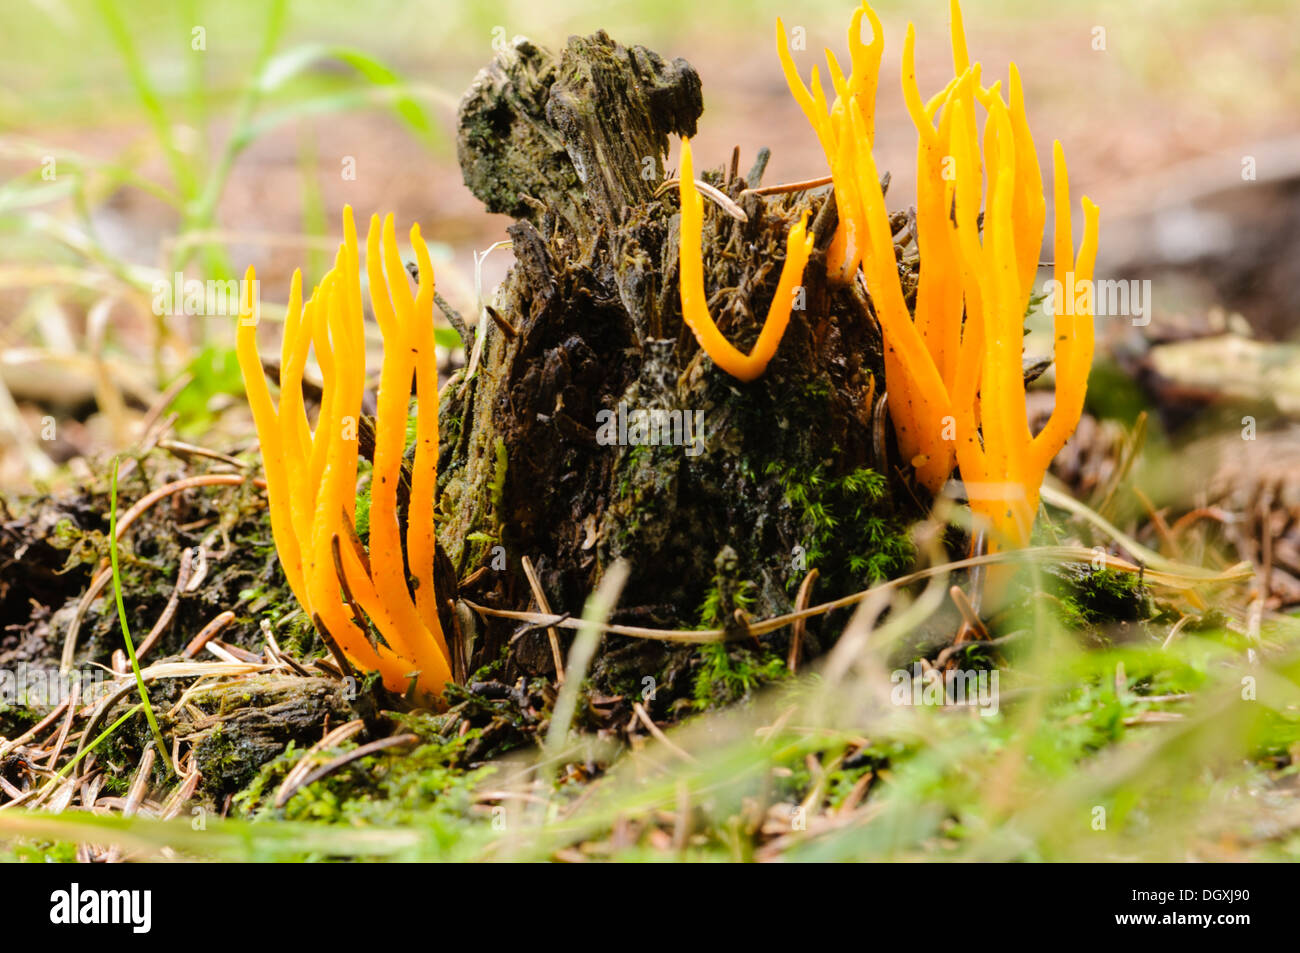 Staghorn fungus (Clavulinopsis helvola) fungus growing on decaying wood Stock Photo